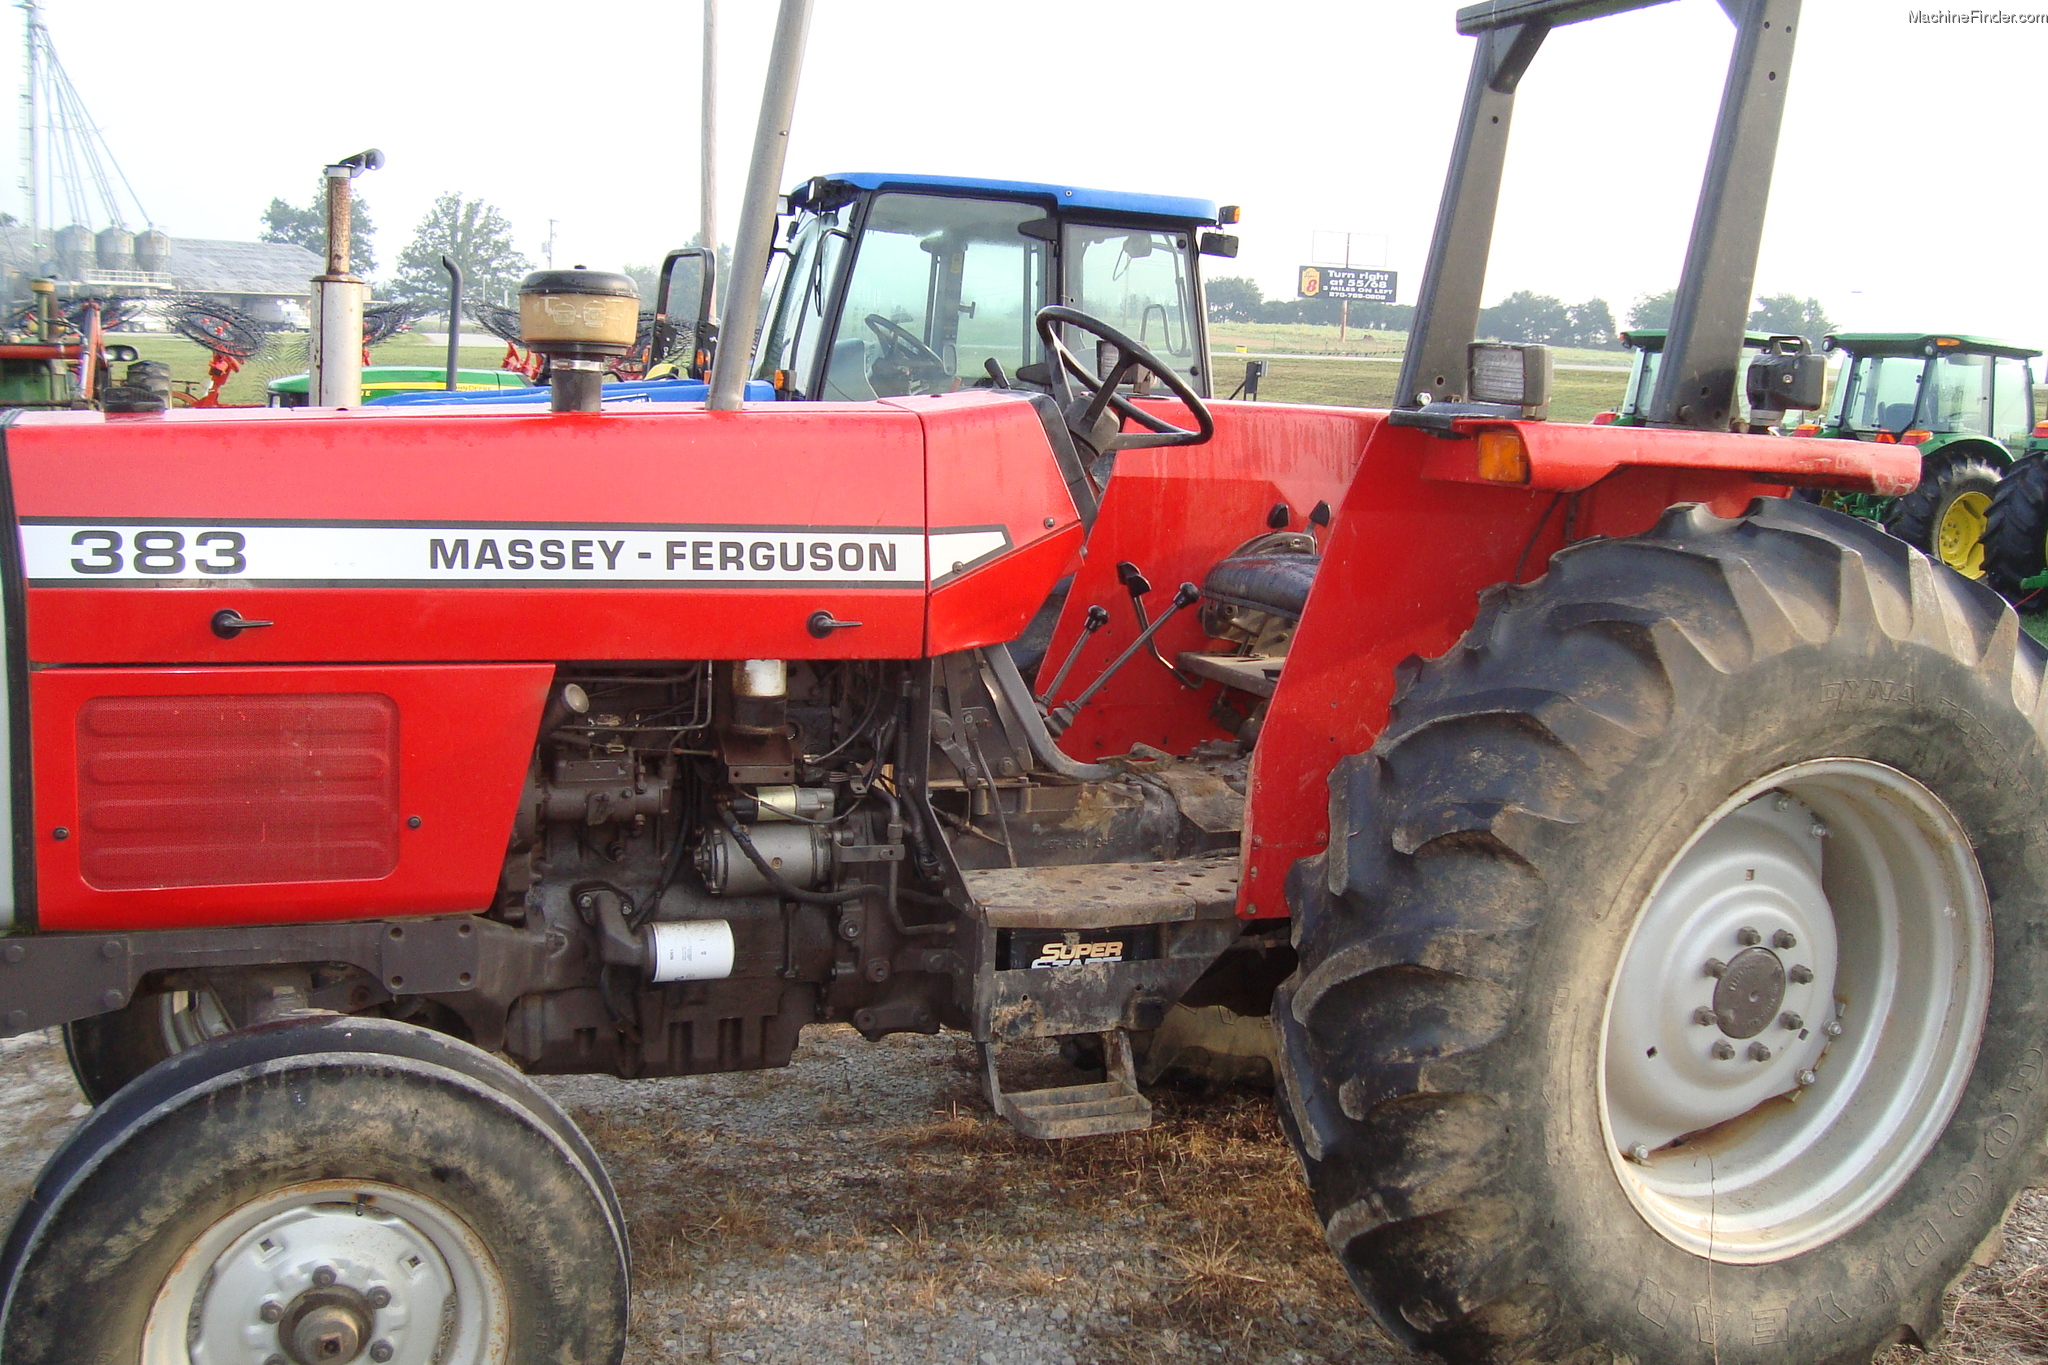 1994 Massey - Ferguson 383 Tractors - Utility (40-100hp) - John Deere ...